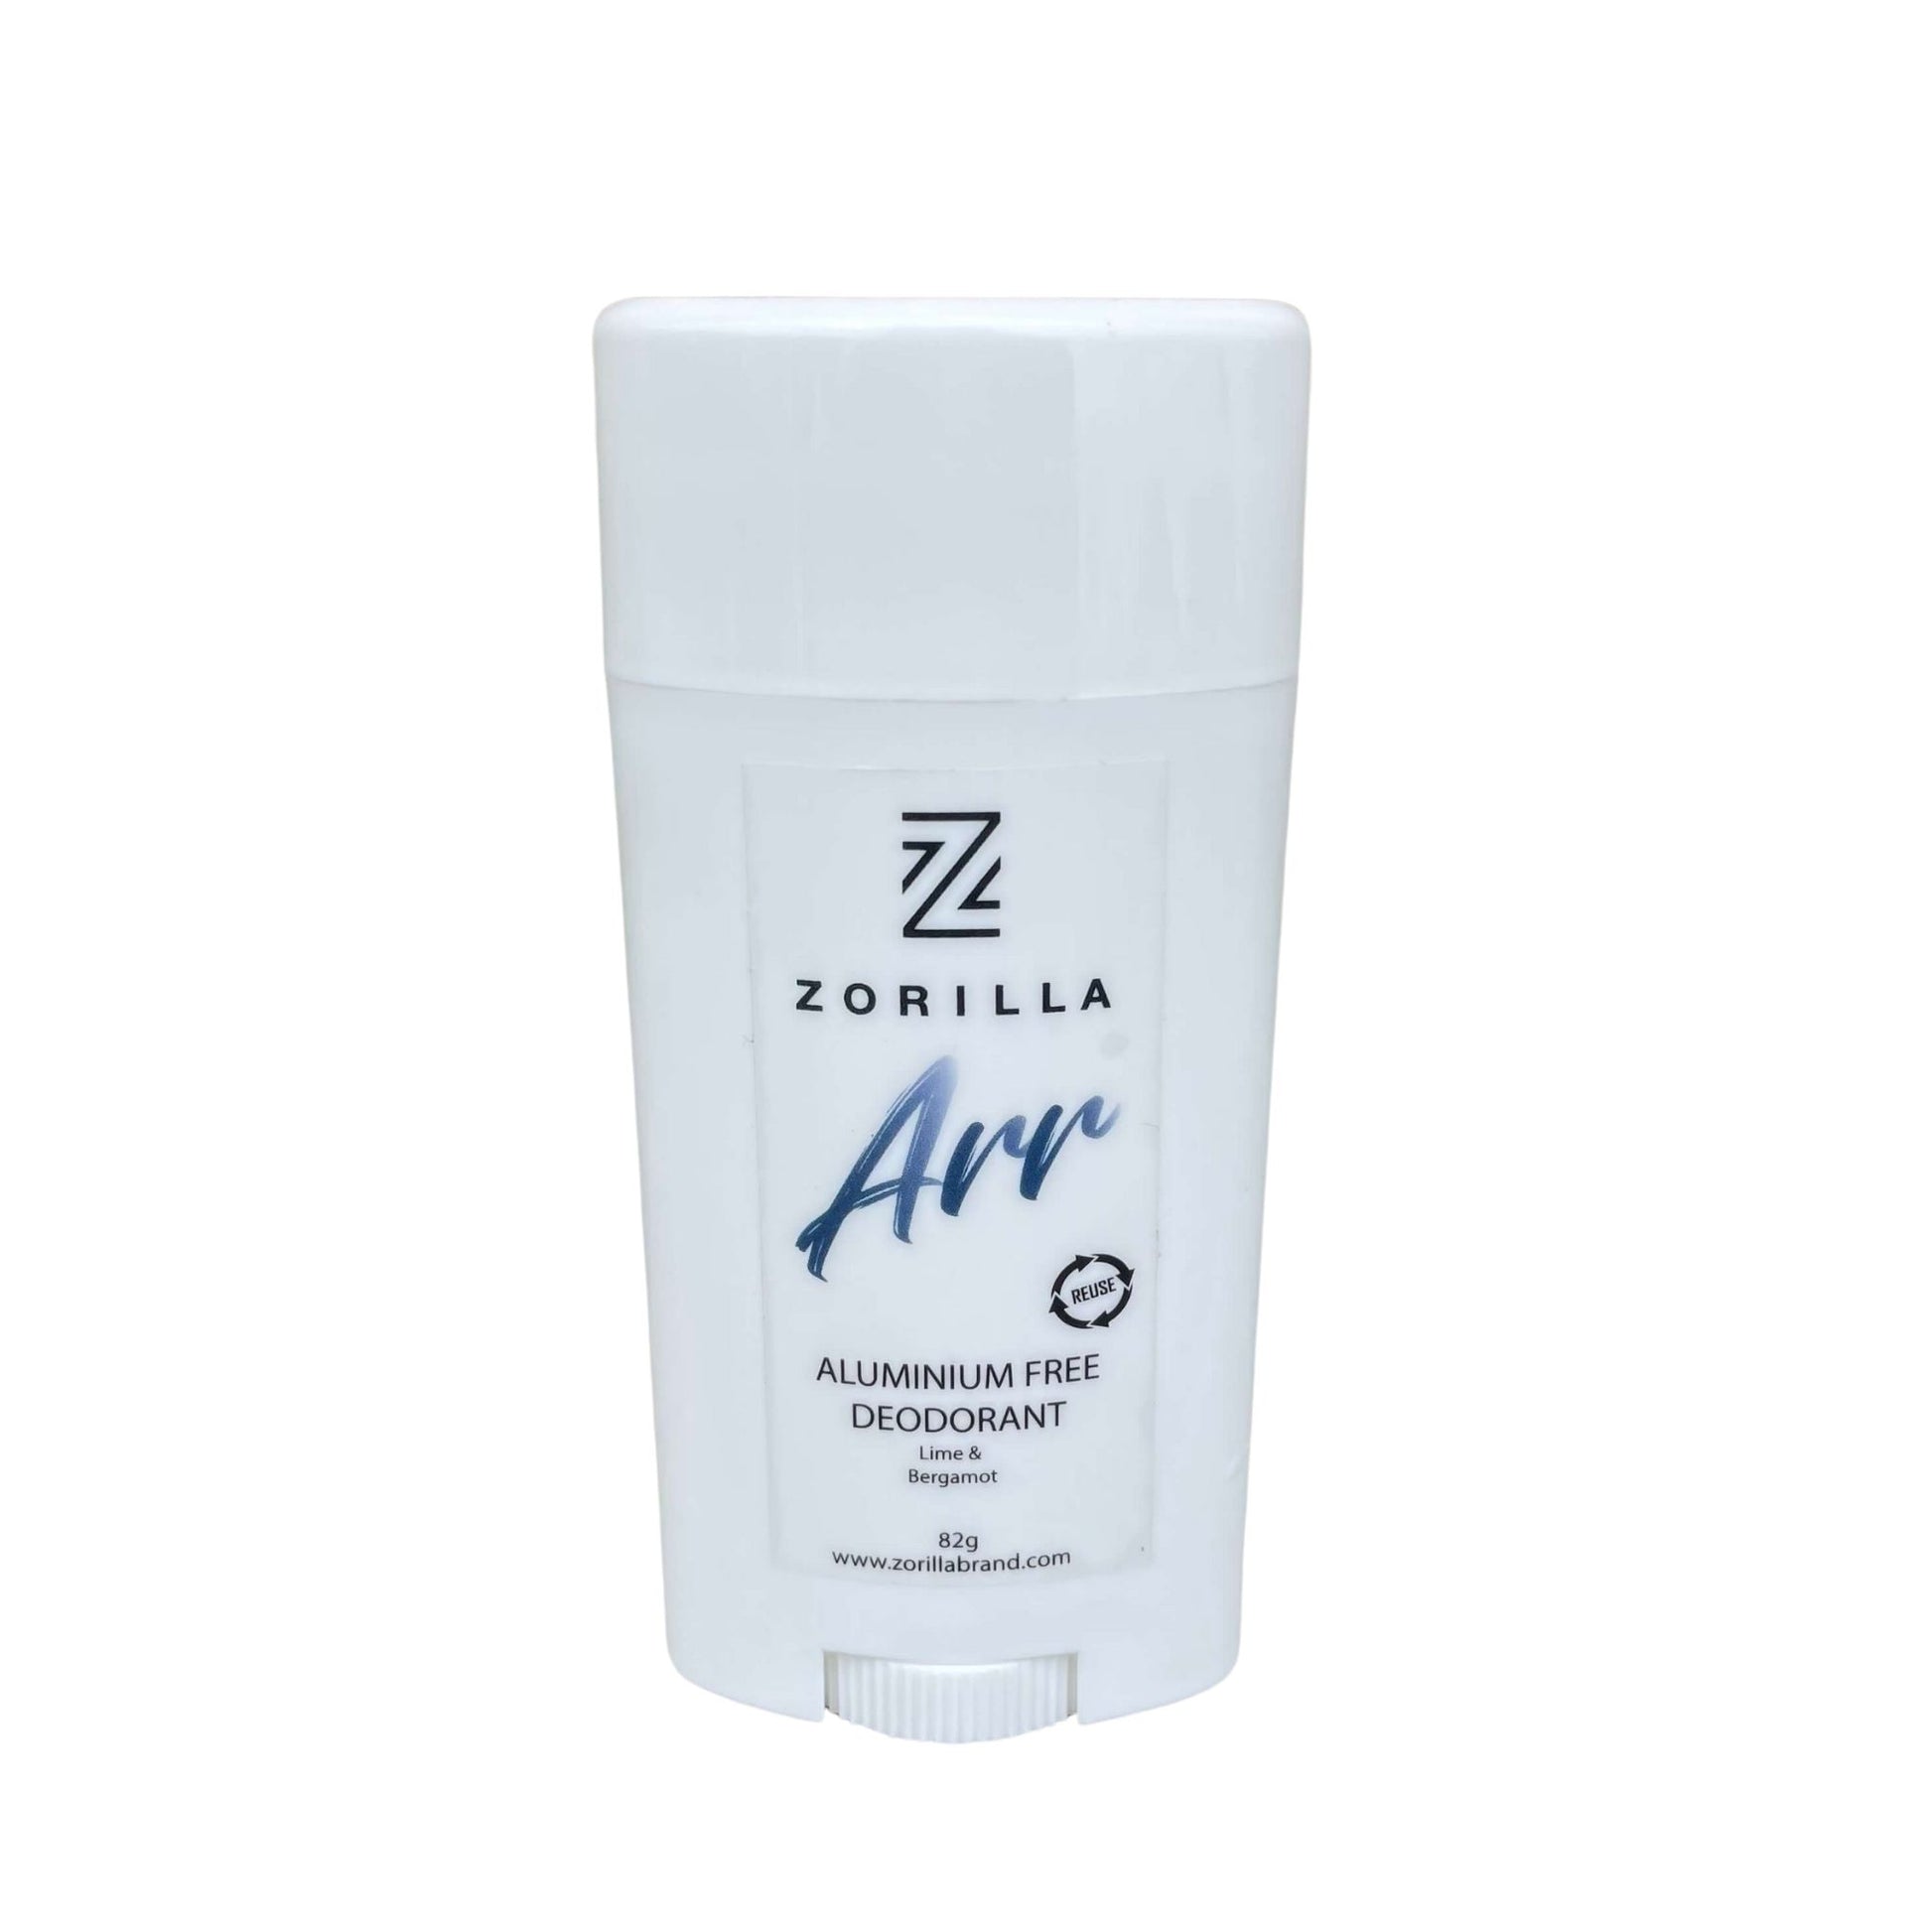 Zorilla natural men's deodorant tube - Arr